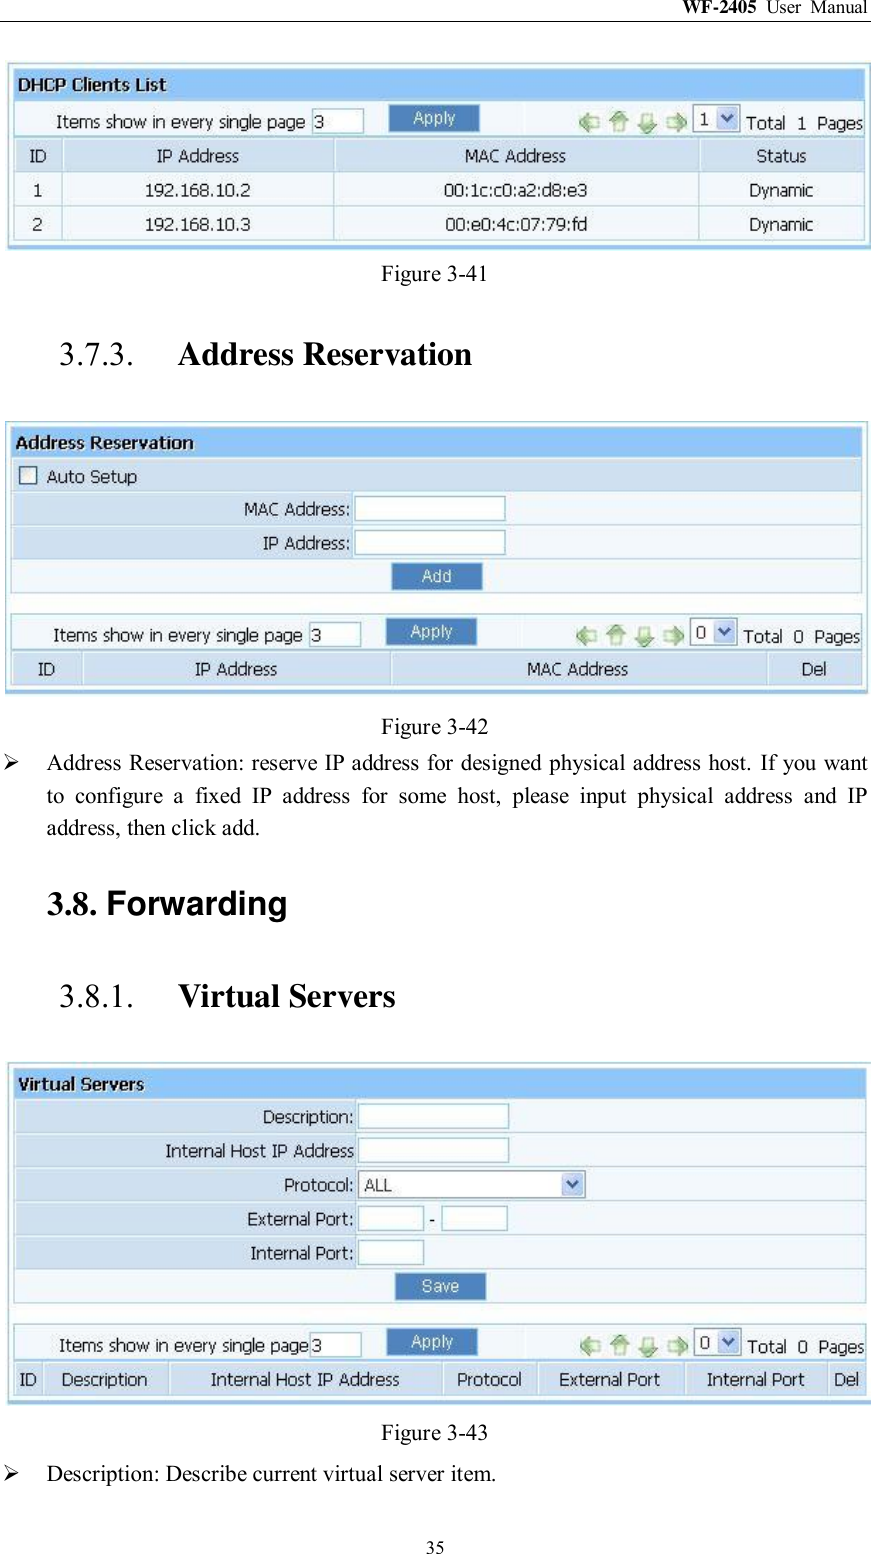 WF-2405  User  Manual  35  Figure 3-41 3.7.3. Address Reservation  Figure 3-42  Address Reservation: reserve IP address for designed physical address host. If you want to  configure  a  fixed  IP  address  for  some  host,  please  input  physical  address  and  IP address, then click add. 3.8. Forwarding 3.8.1. Virtual Servers  Figure 3-43  Description: Describe current virtual server item. 